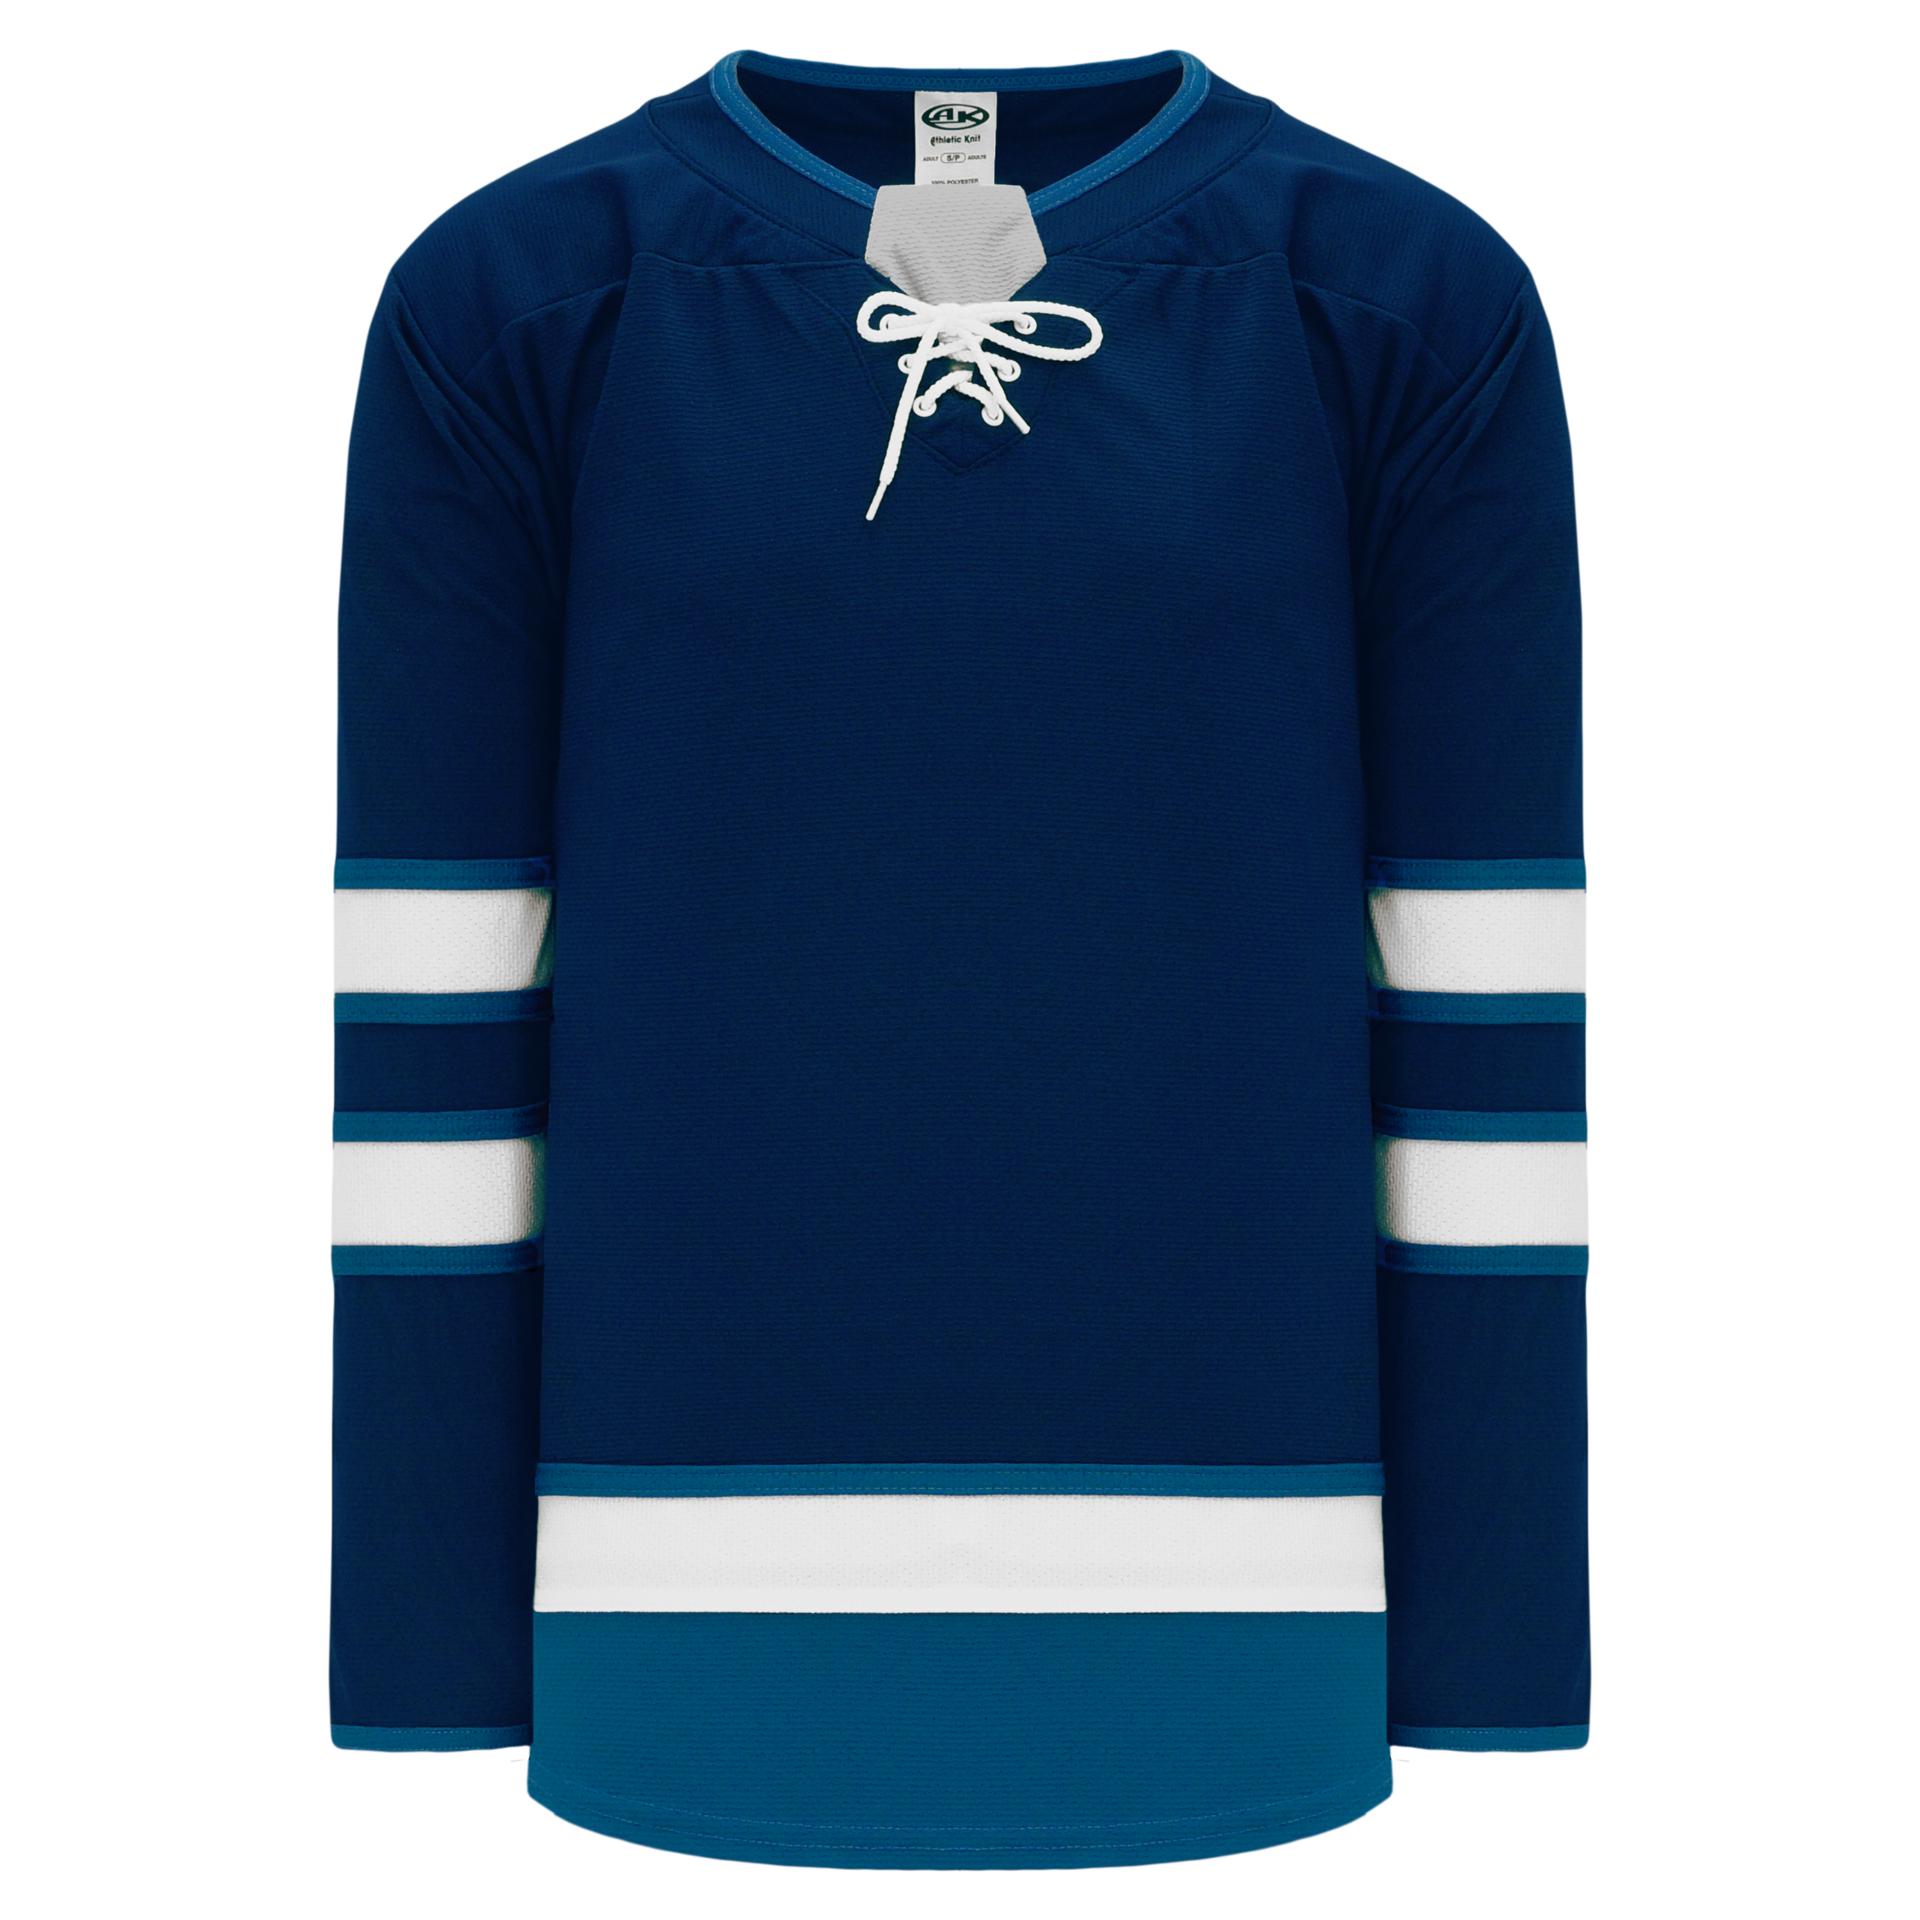 Winnipeg Jets '48 jersey : r/hockeyjerseys